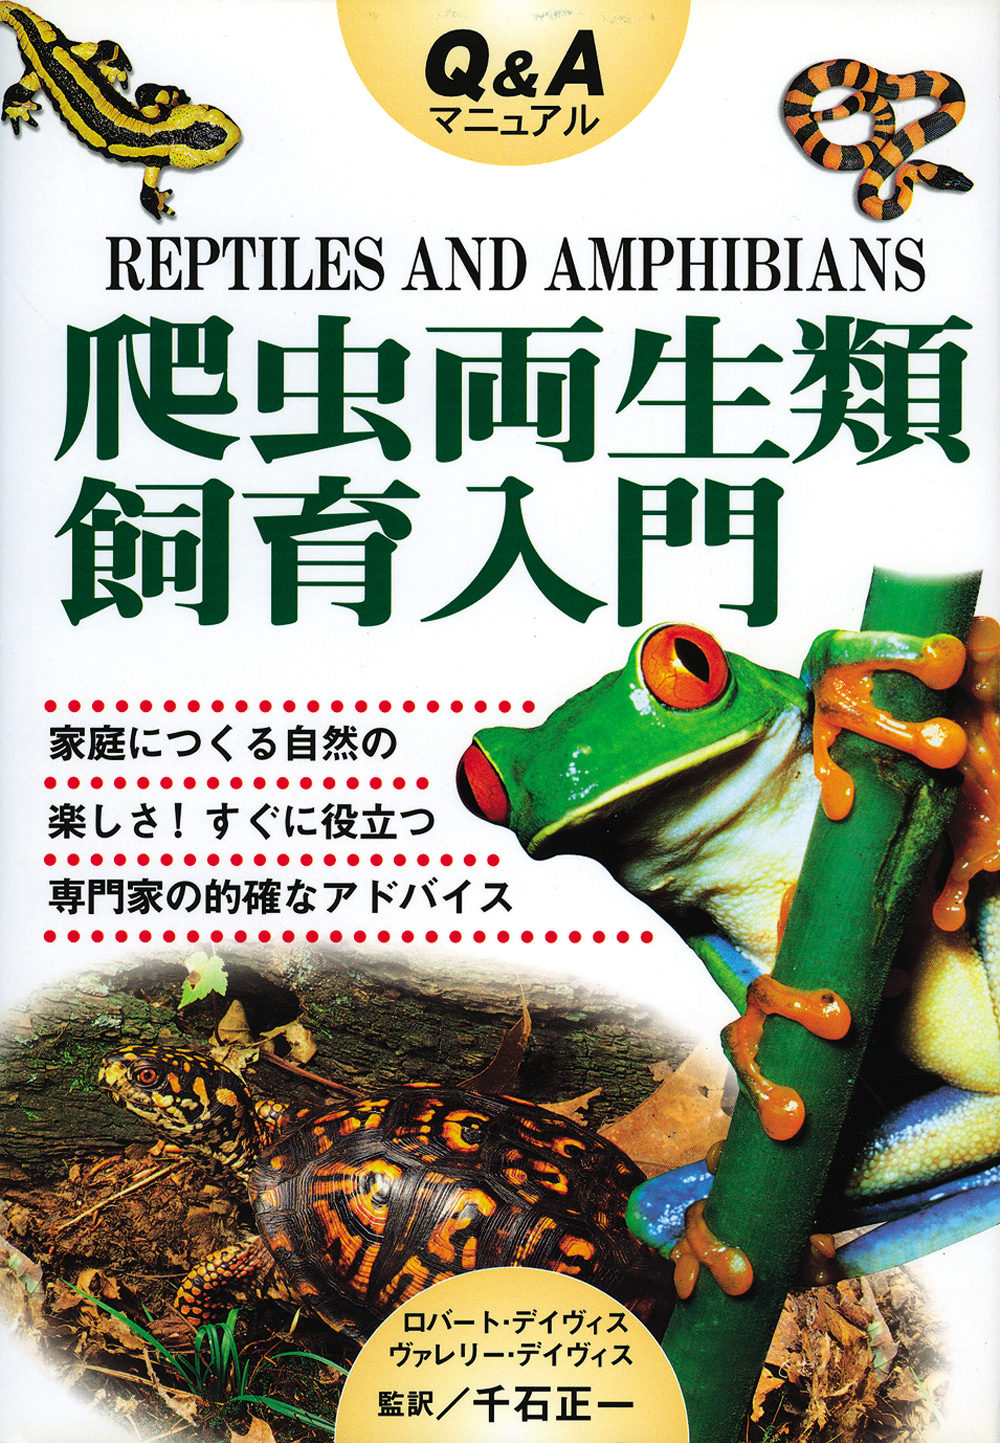 Q&Aマニュアル爬虫両生類飼育入門の商品画像